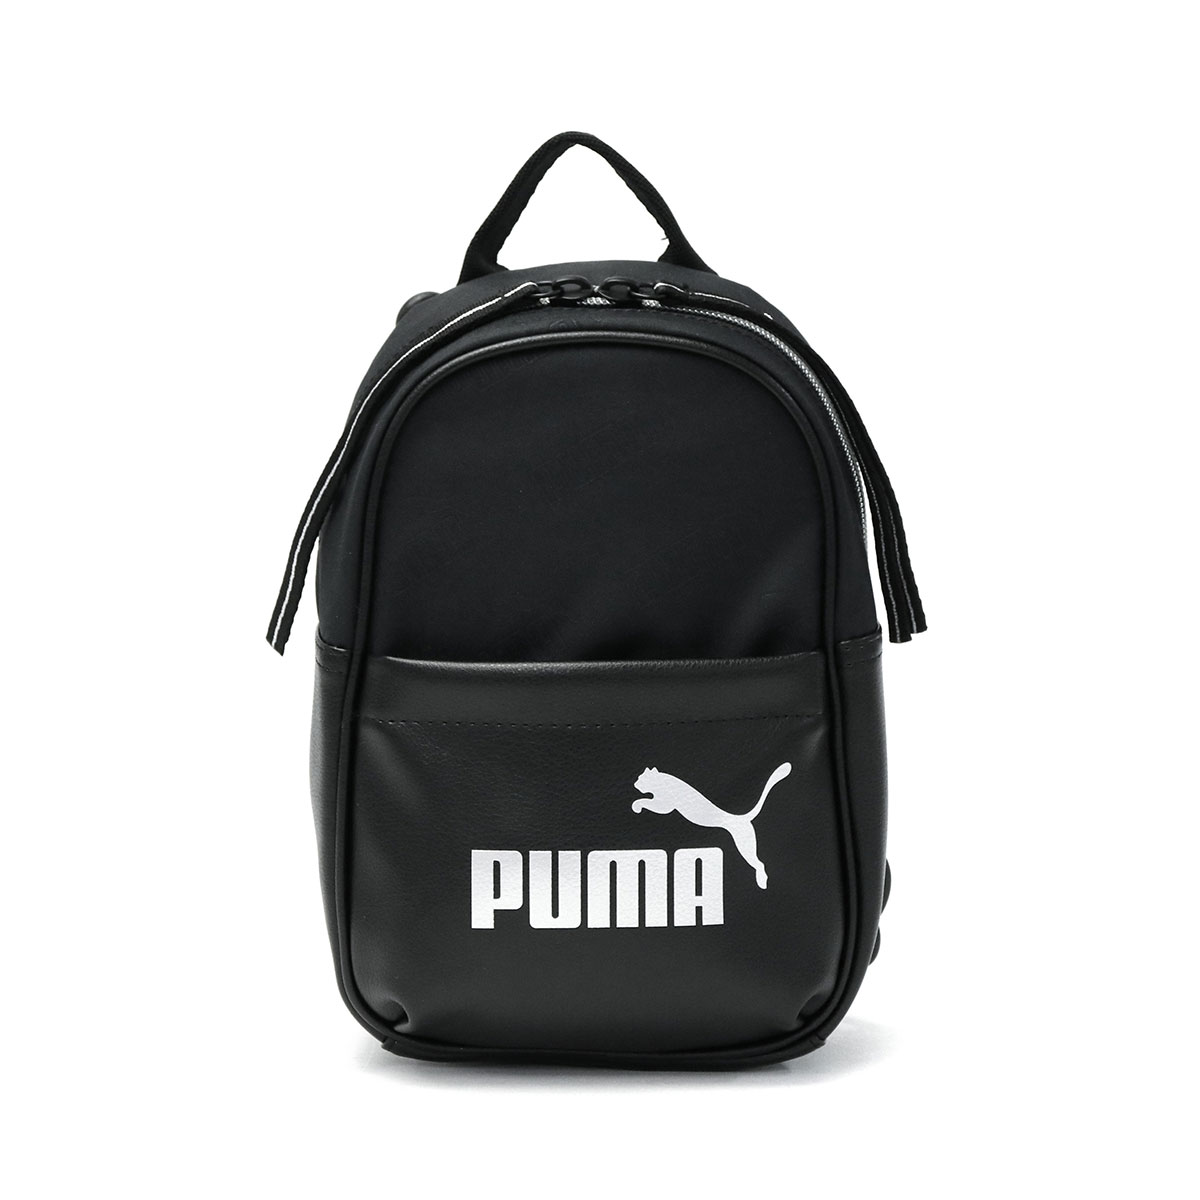 Puma プーマ ウィメンズコアアップ ミニミ バッグパック 3l 正規販売店 カバン 小物の専門店のギャレリアモール